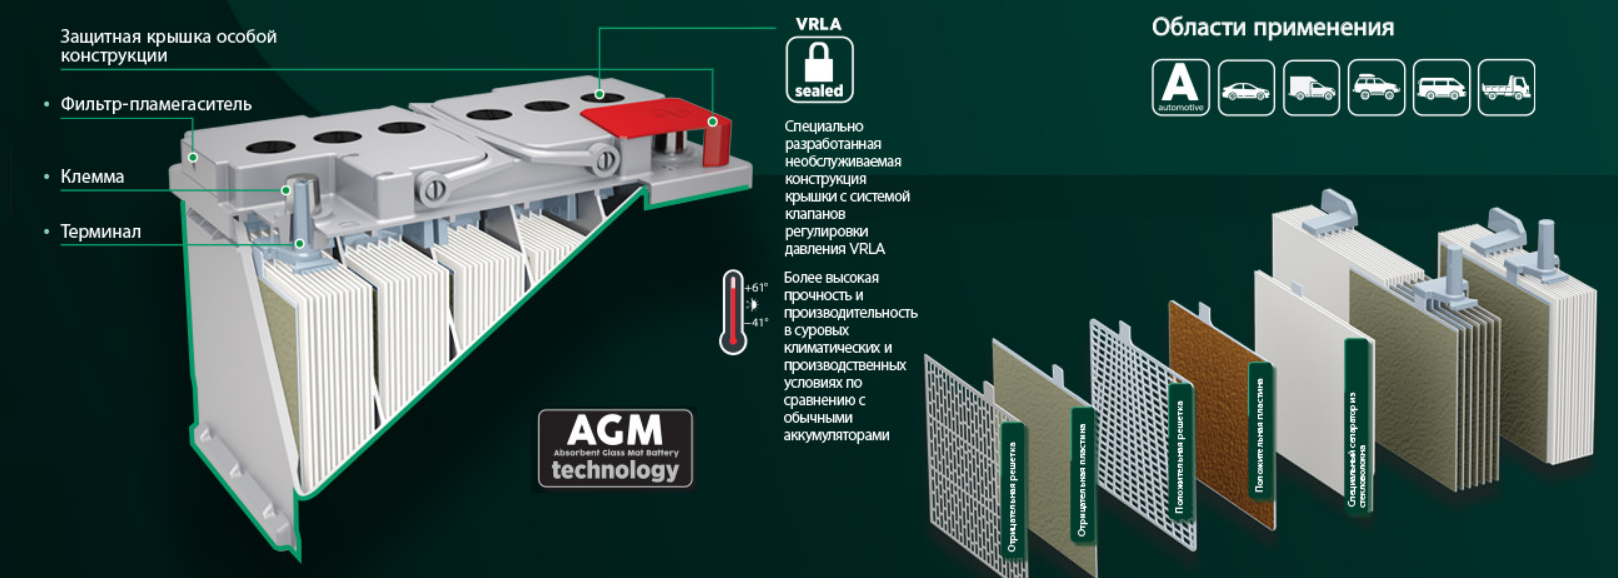 Agm срок службы. Конструкция AGM аккумулятора. AGM технология в аккумуляторах. АГМ аккумулятор технология. АКБ С технологией AGM.